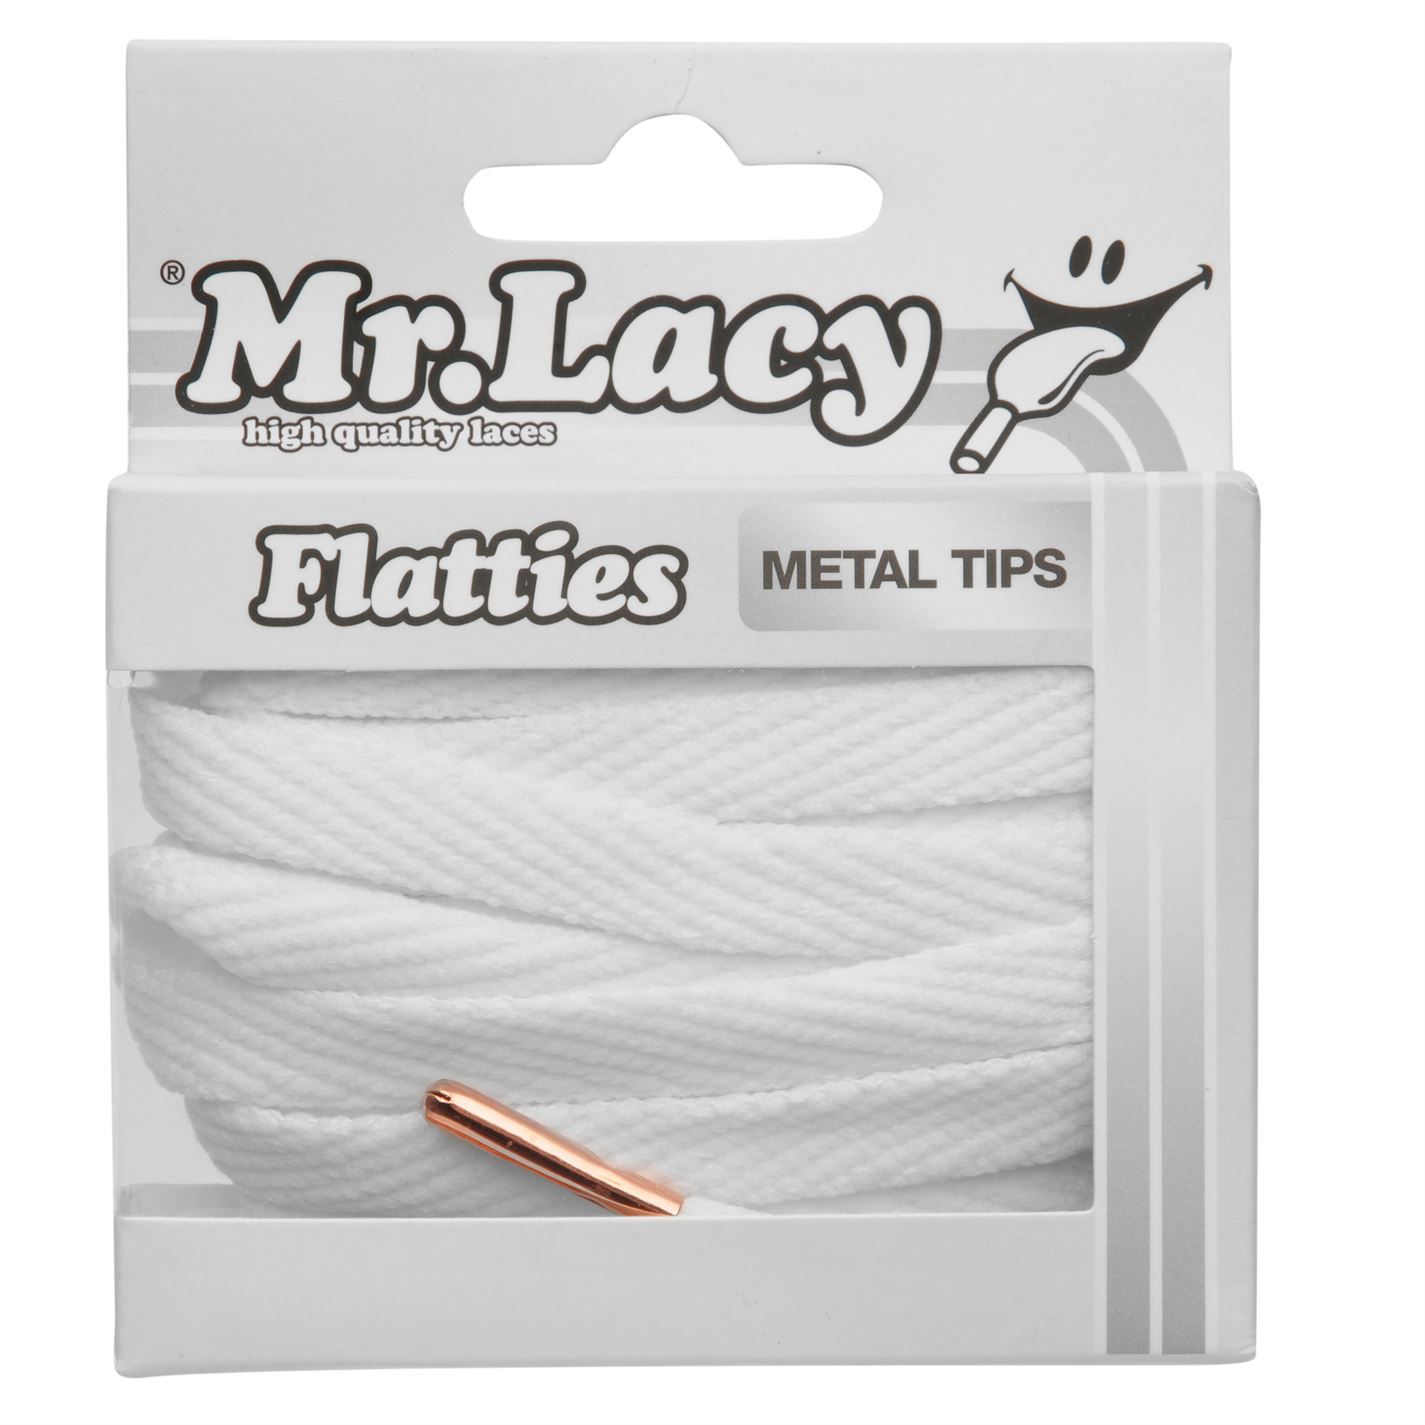 Premium Laces Laces Mr Lacy Flatties Flat Black Shoelace with Silver Metal Tip 